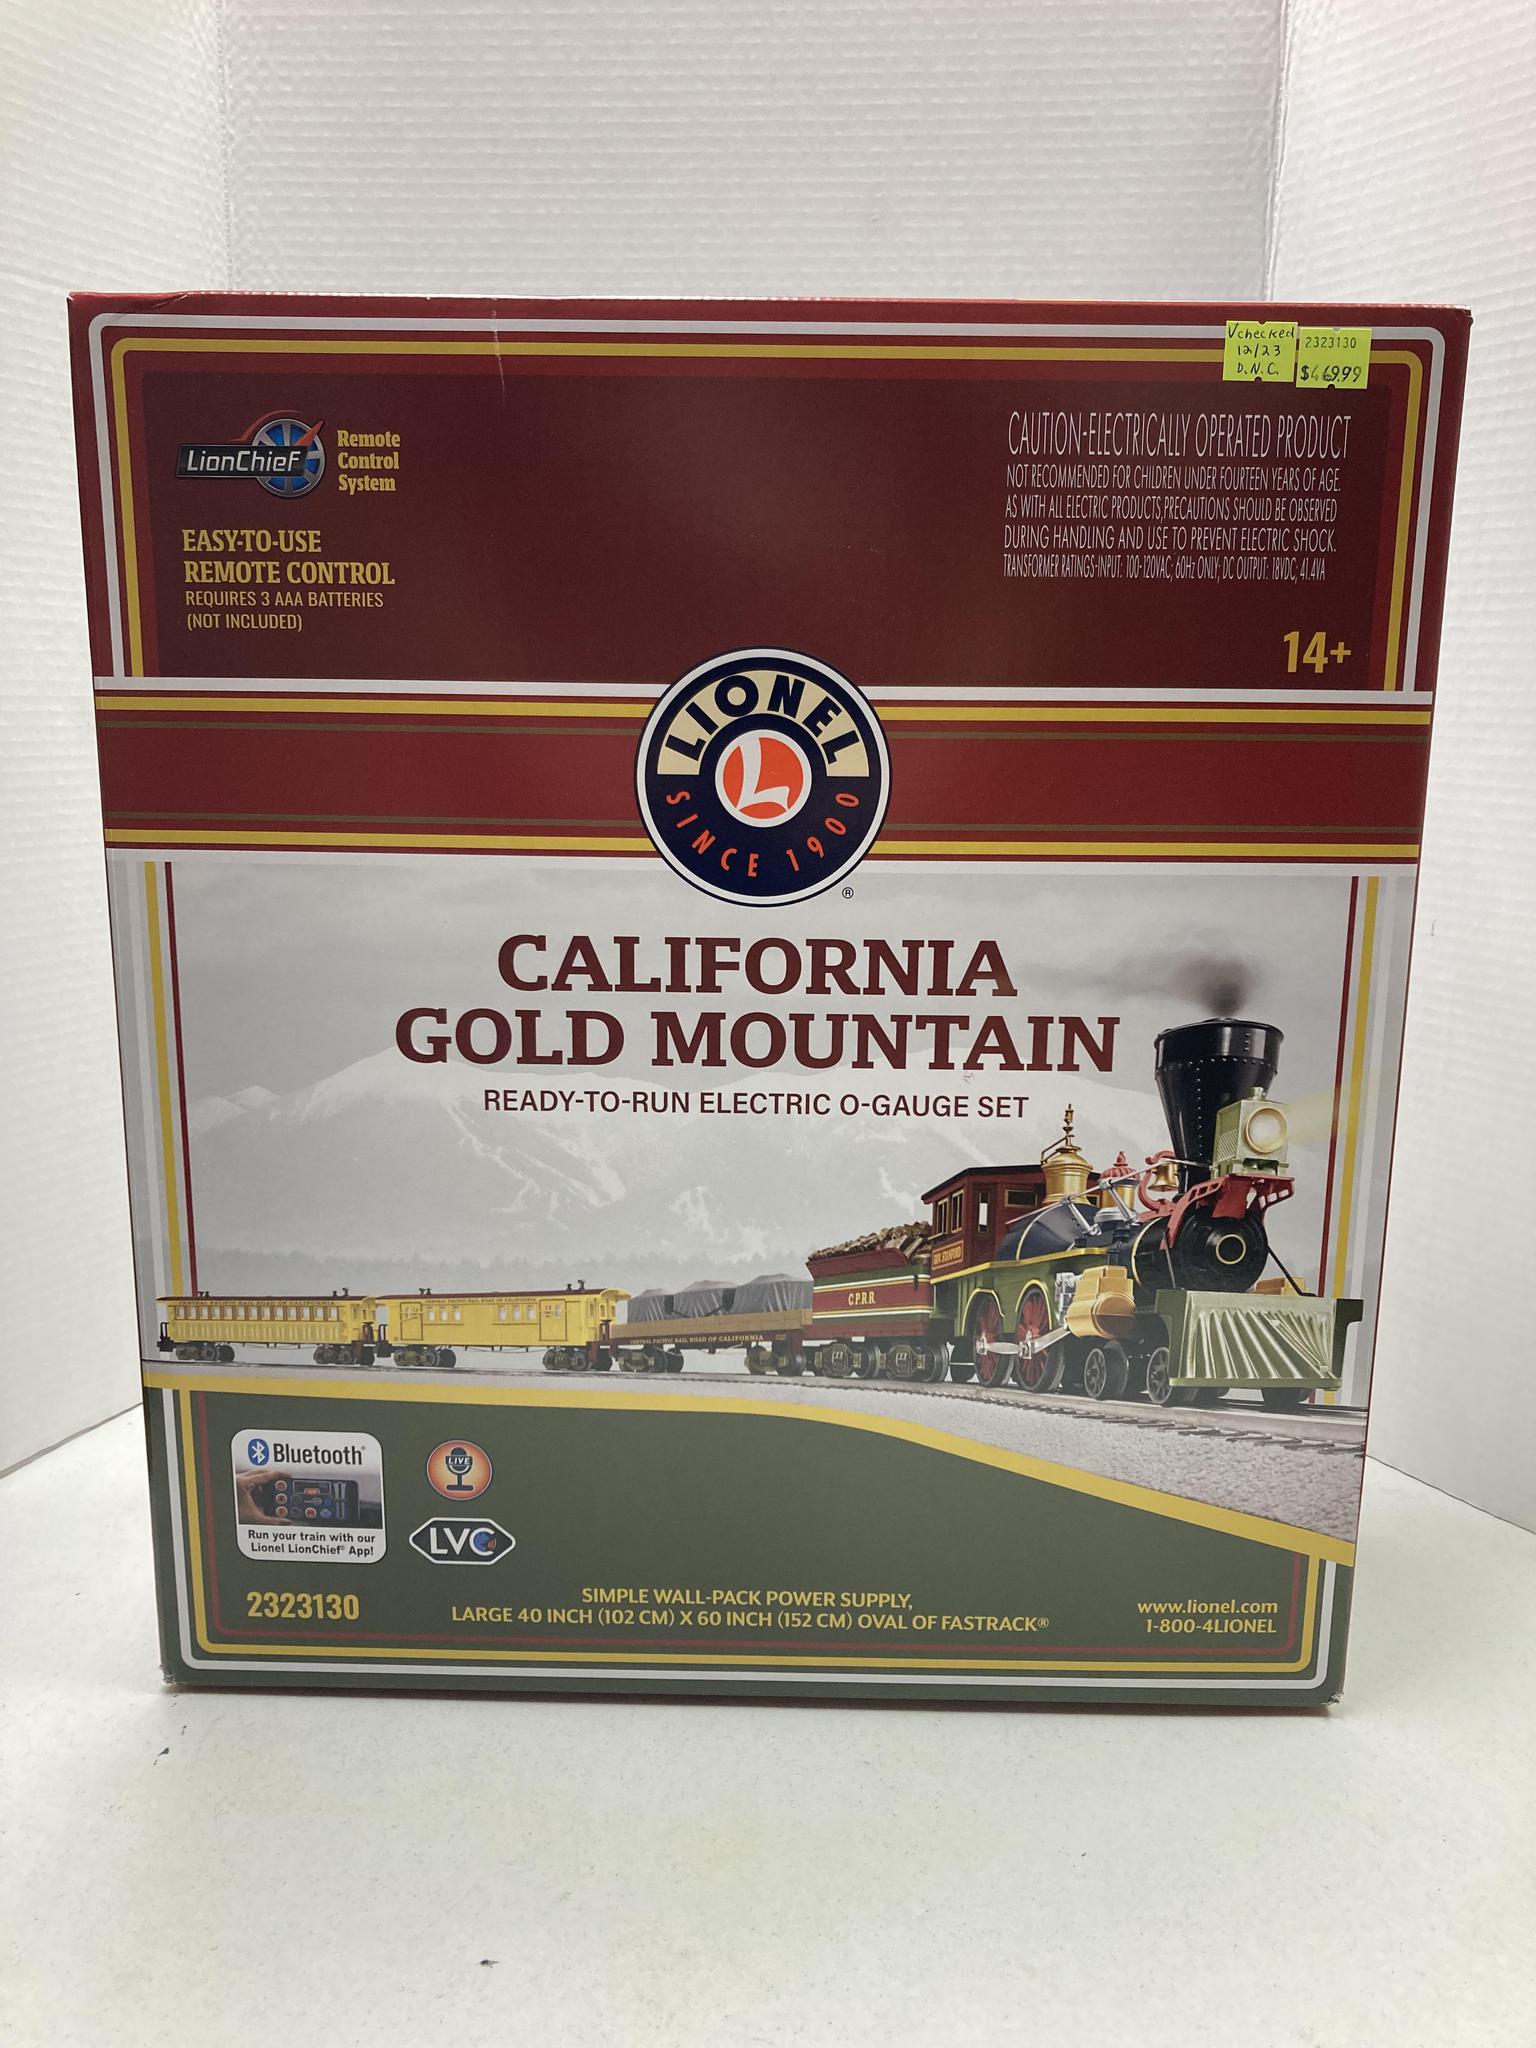 Lionel California Gold Mountain Electric O-Gauge Set (2323130)